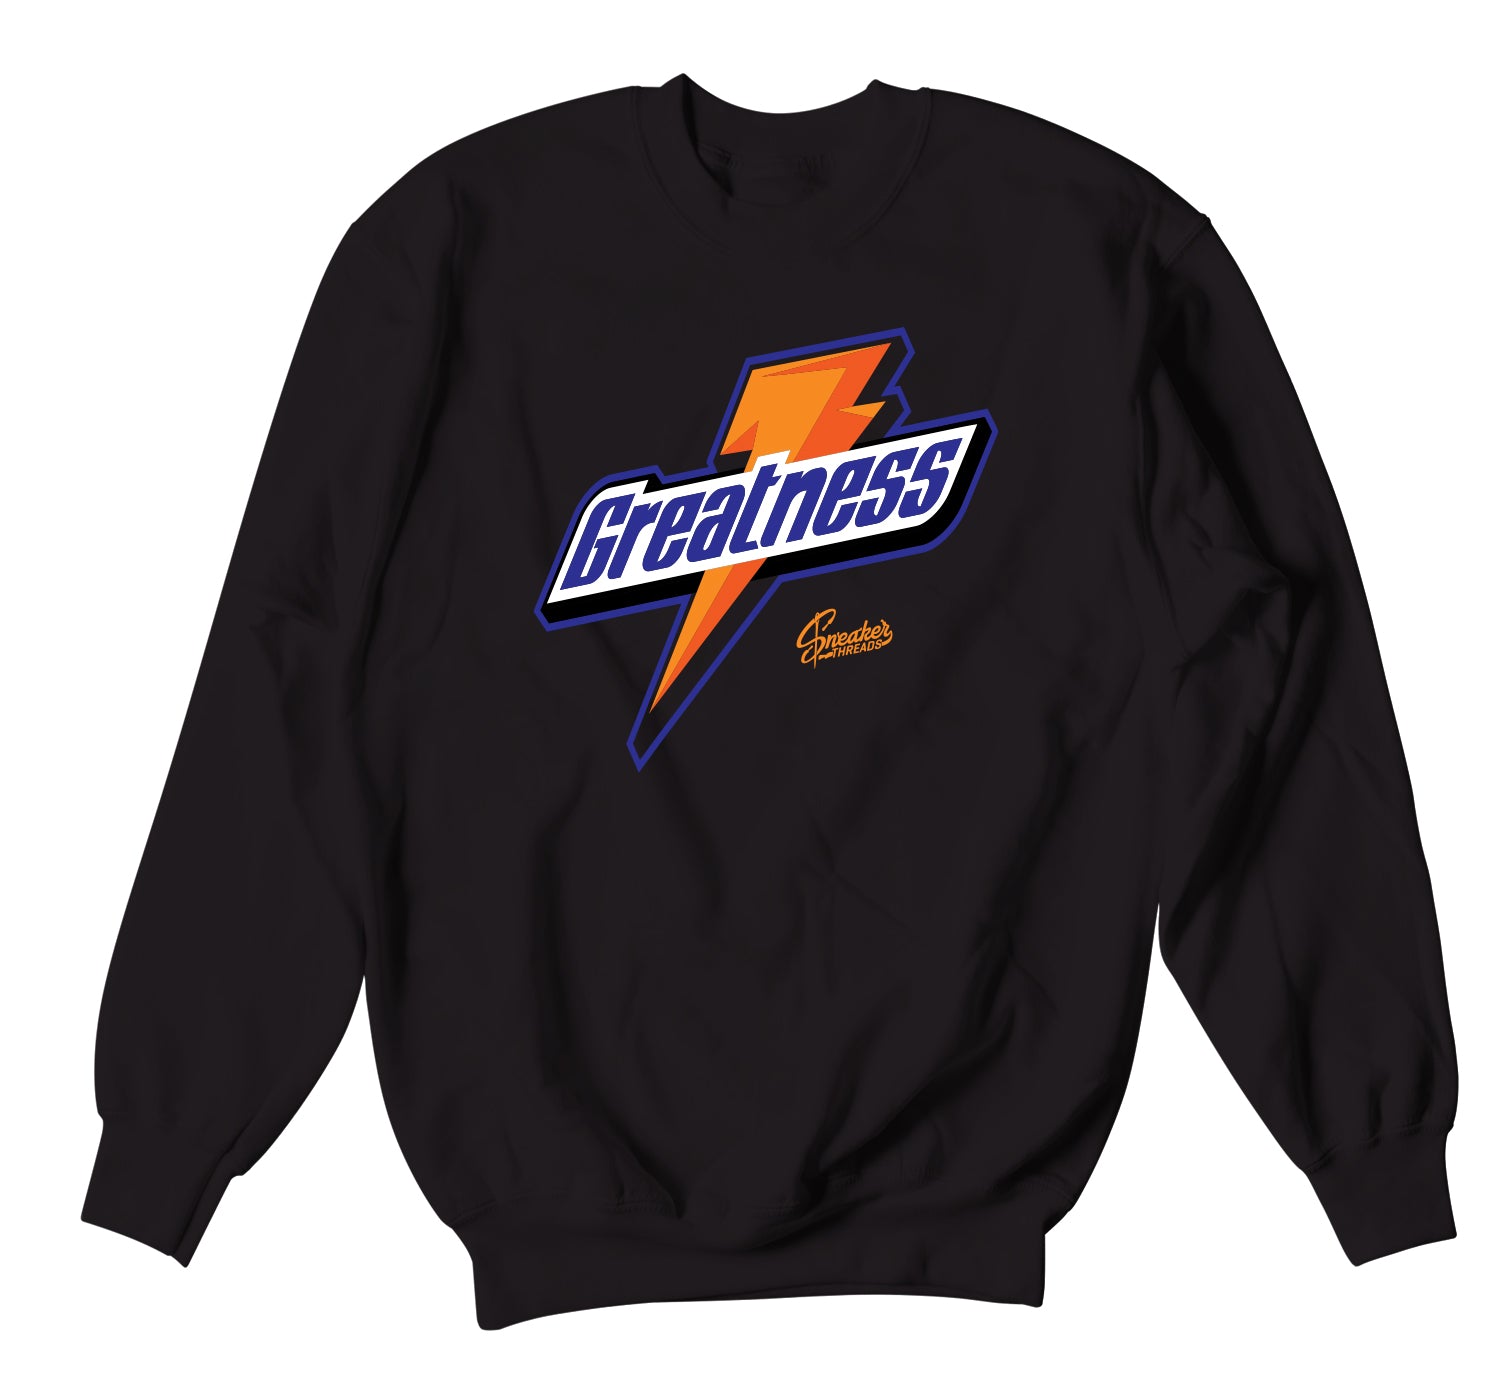 All Star 2020 Monstars Sweater - Greatness - Black